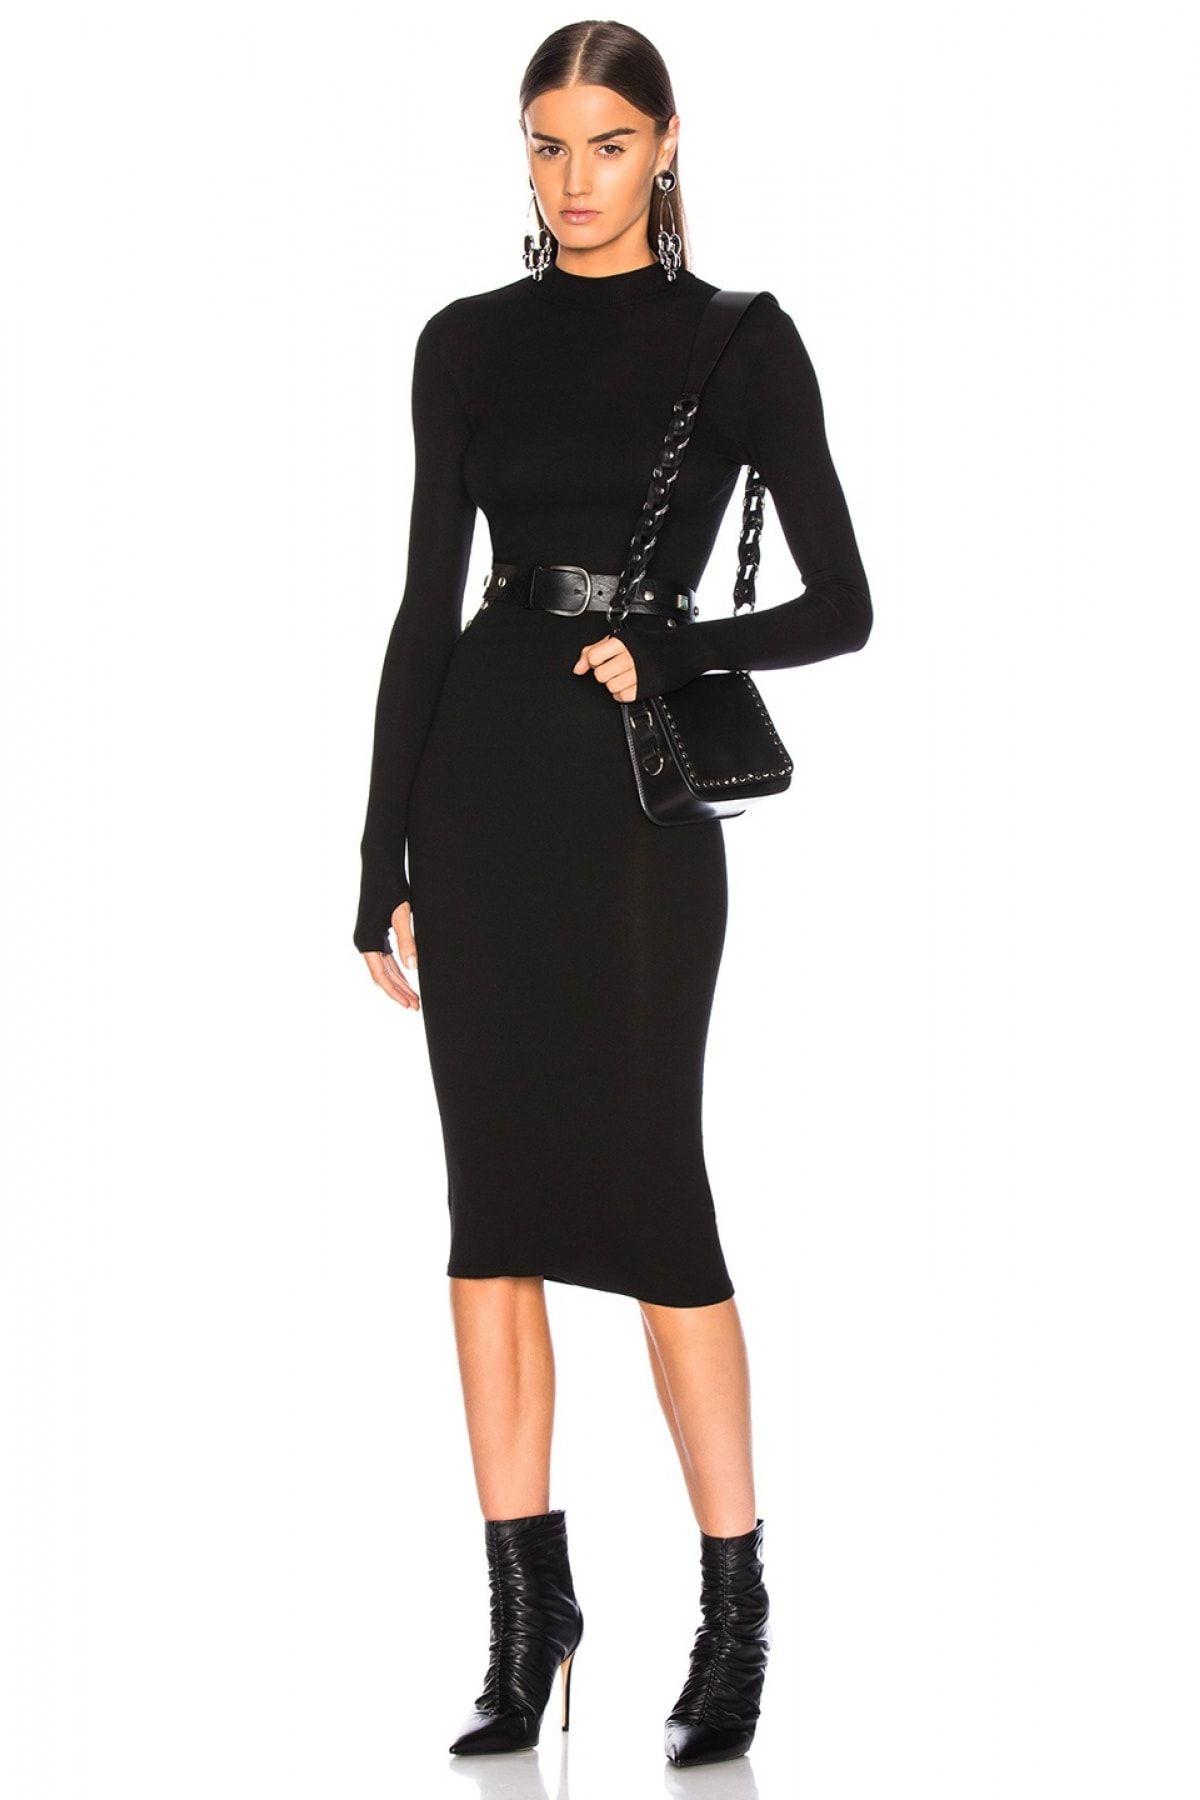 By Umut Design Kadın Siyah Parmak Geçmeli Hakim Yaka Elbise 4500611